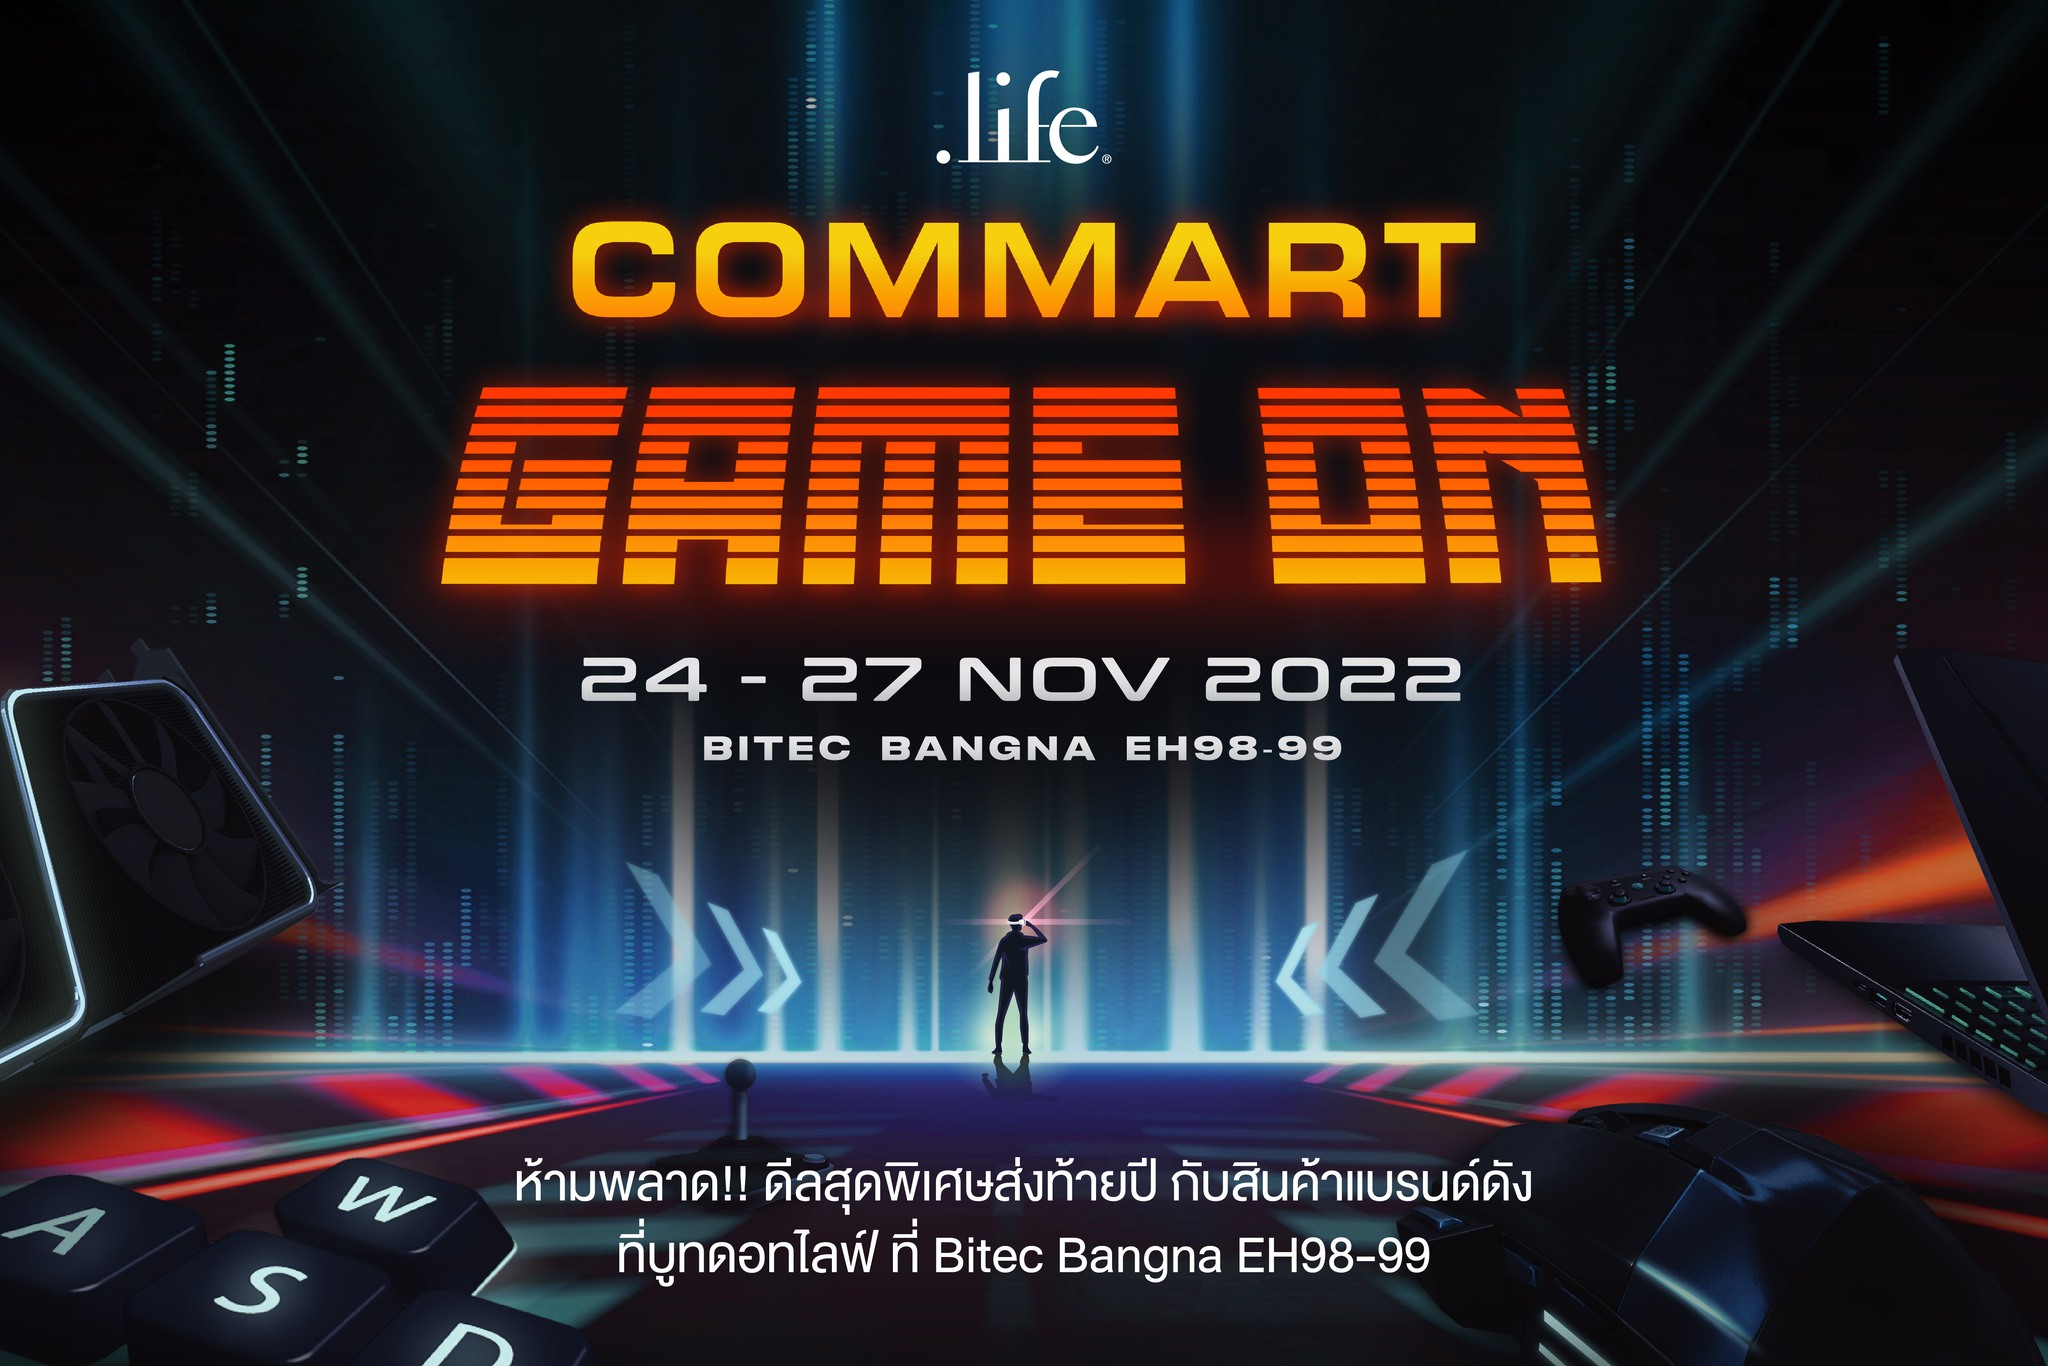 dotlife x Commart Game On ส่องไอเทมห้ามพลาด!!